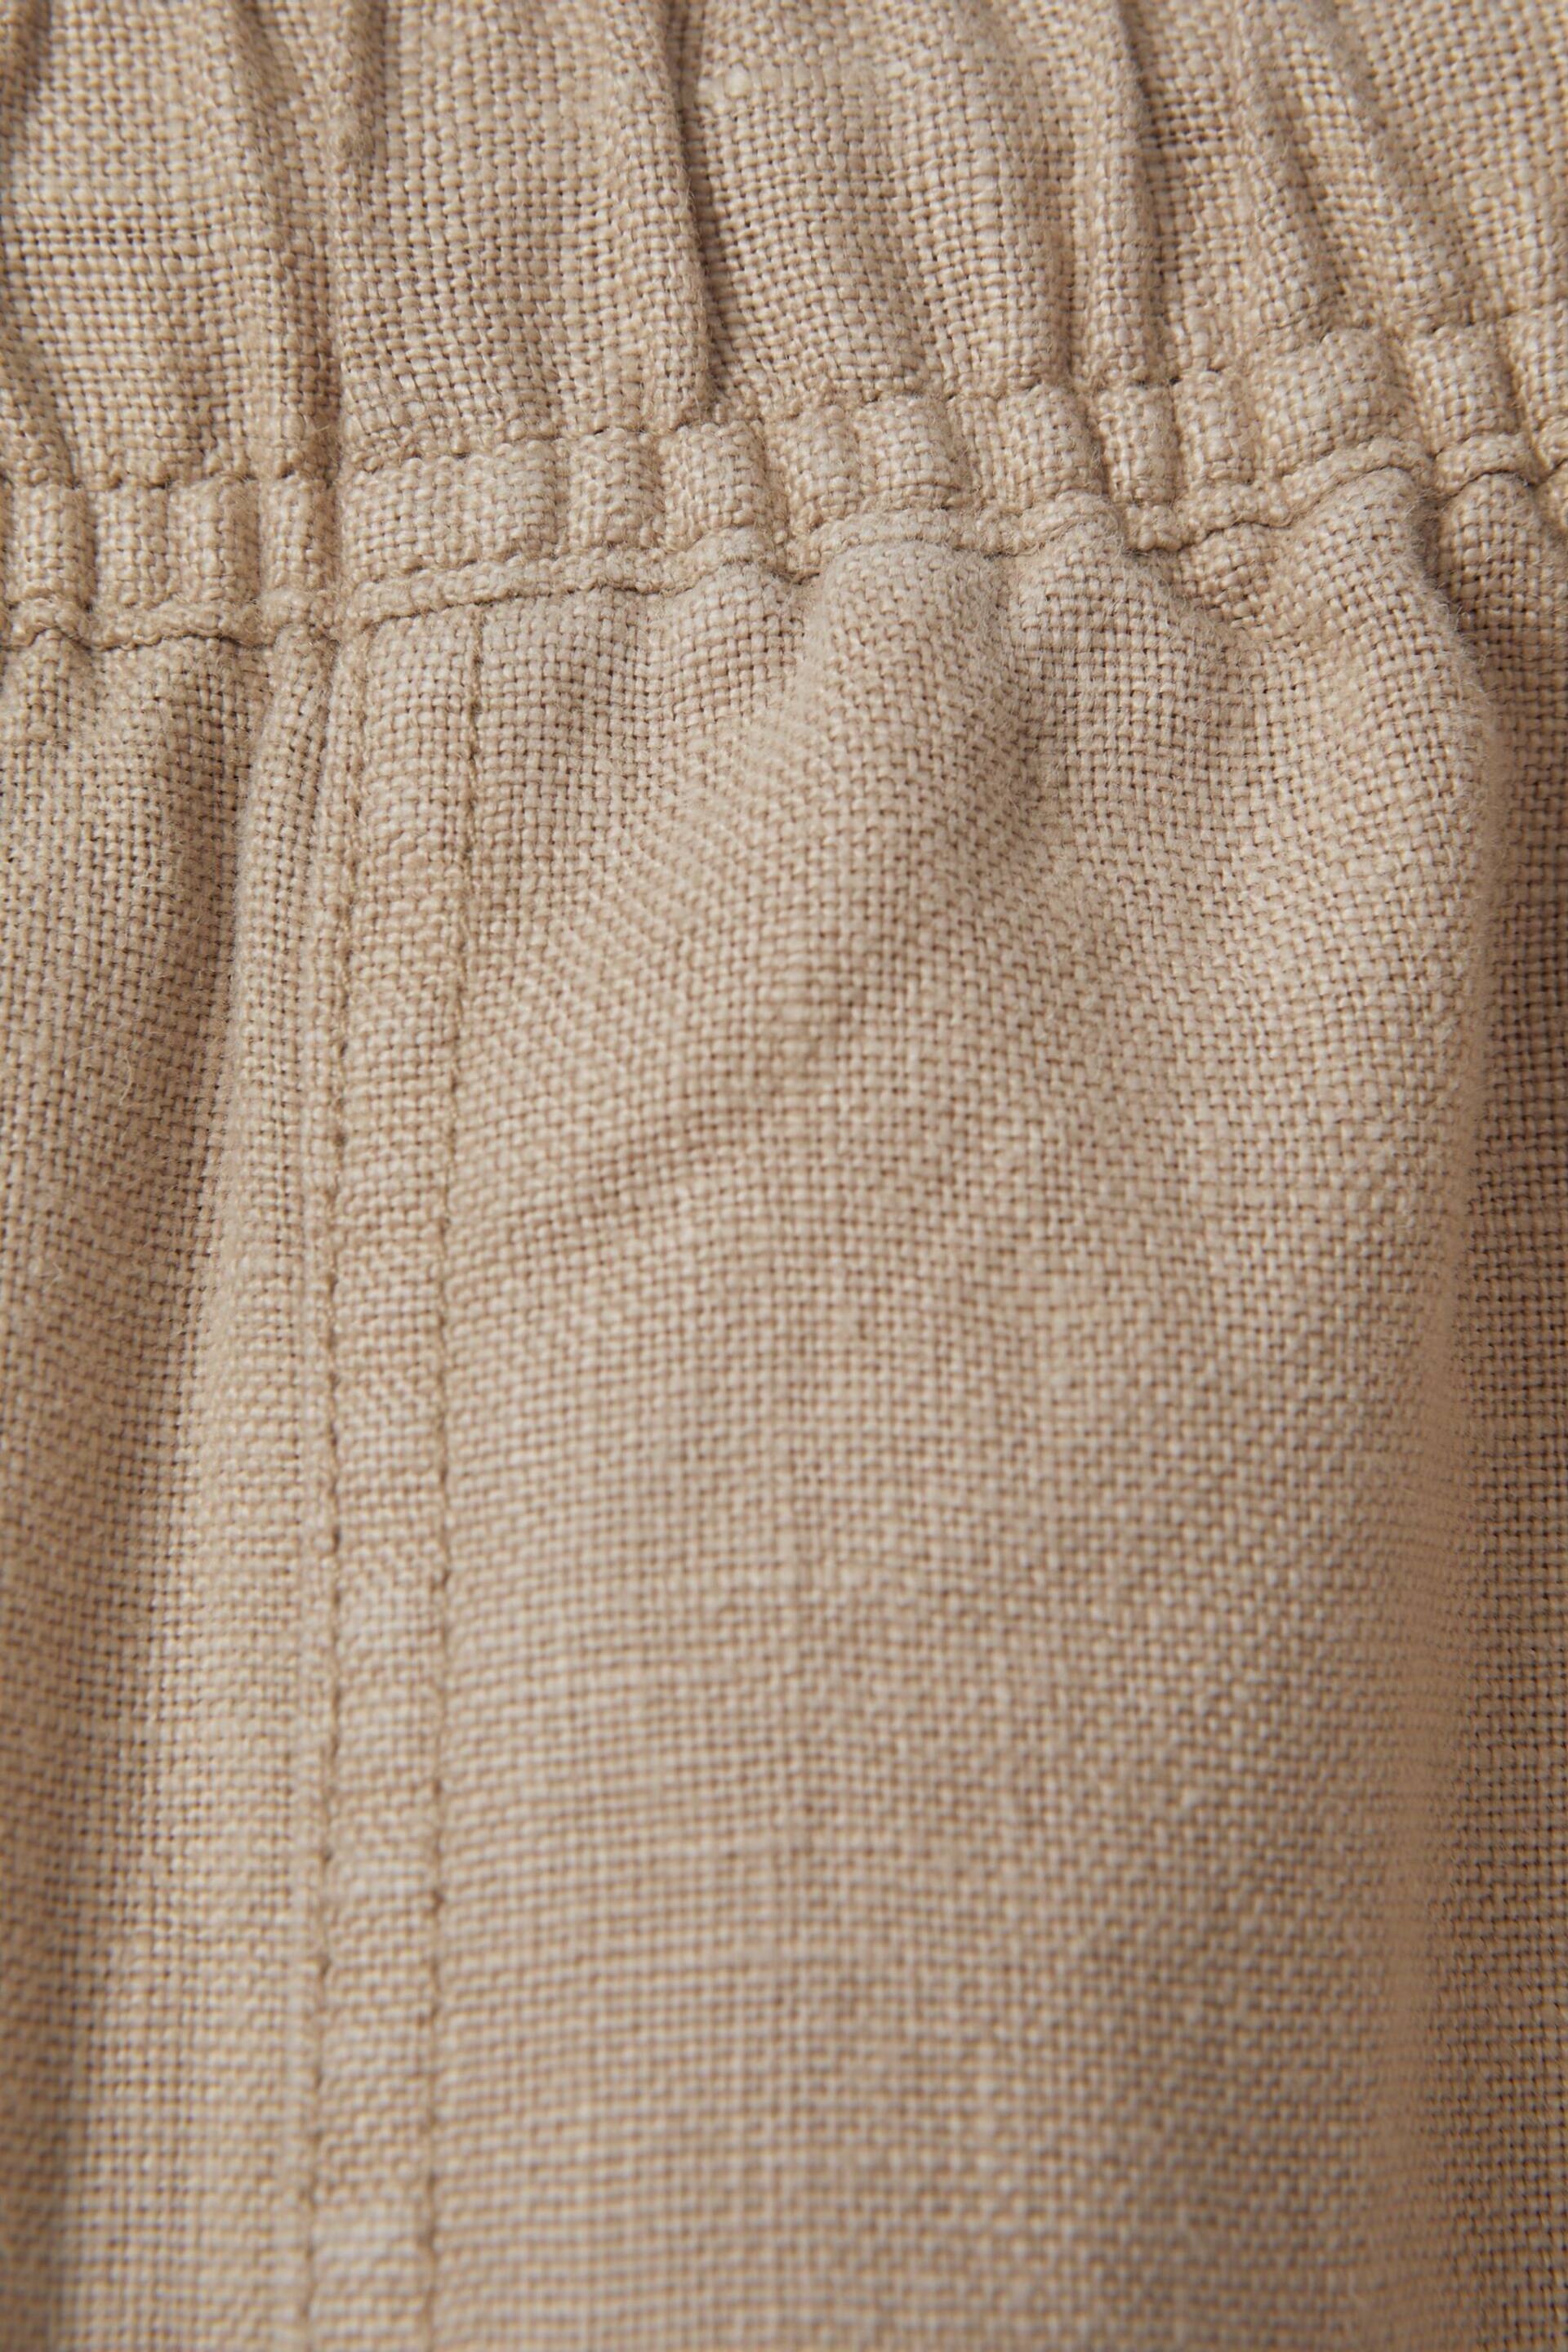 Reiss Sand Romie Drawstring Linen Trousers - Image 6 of 6